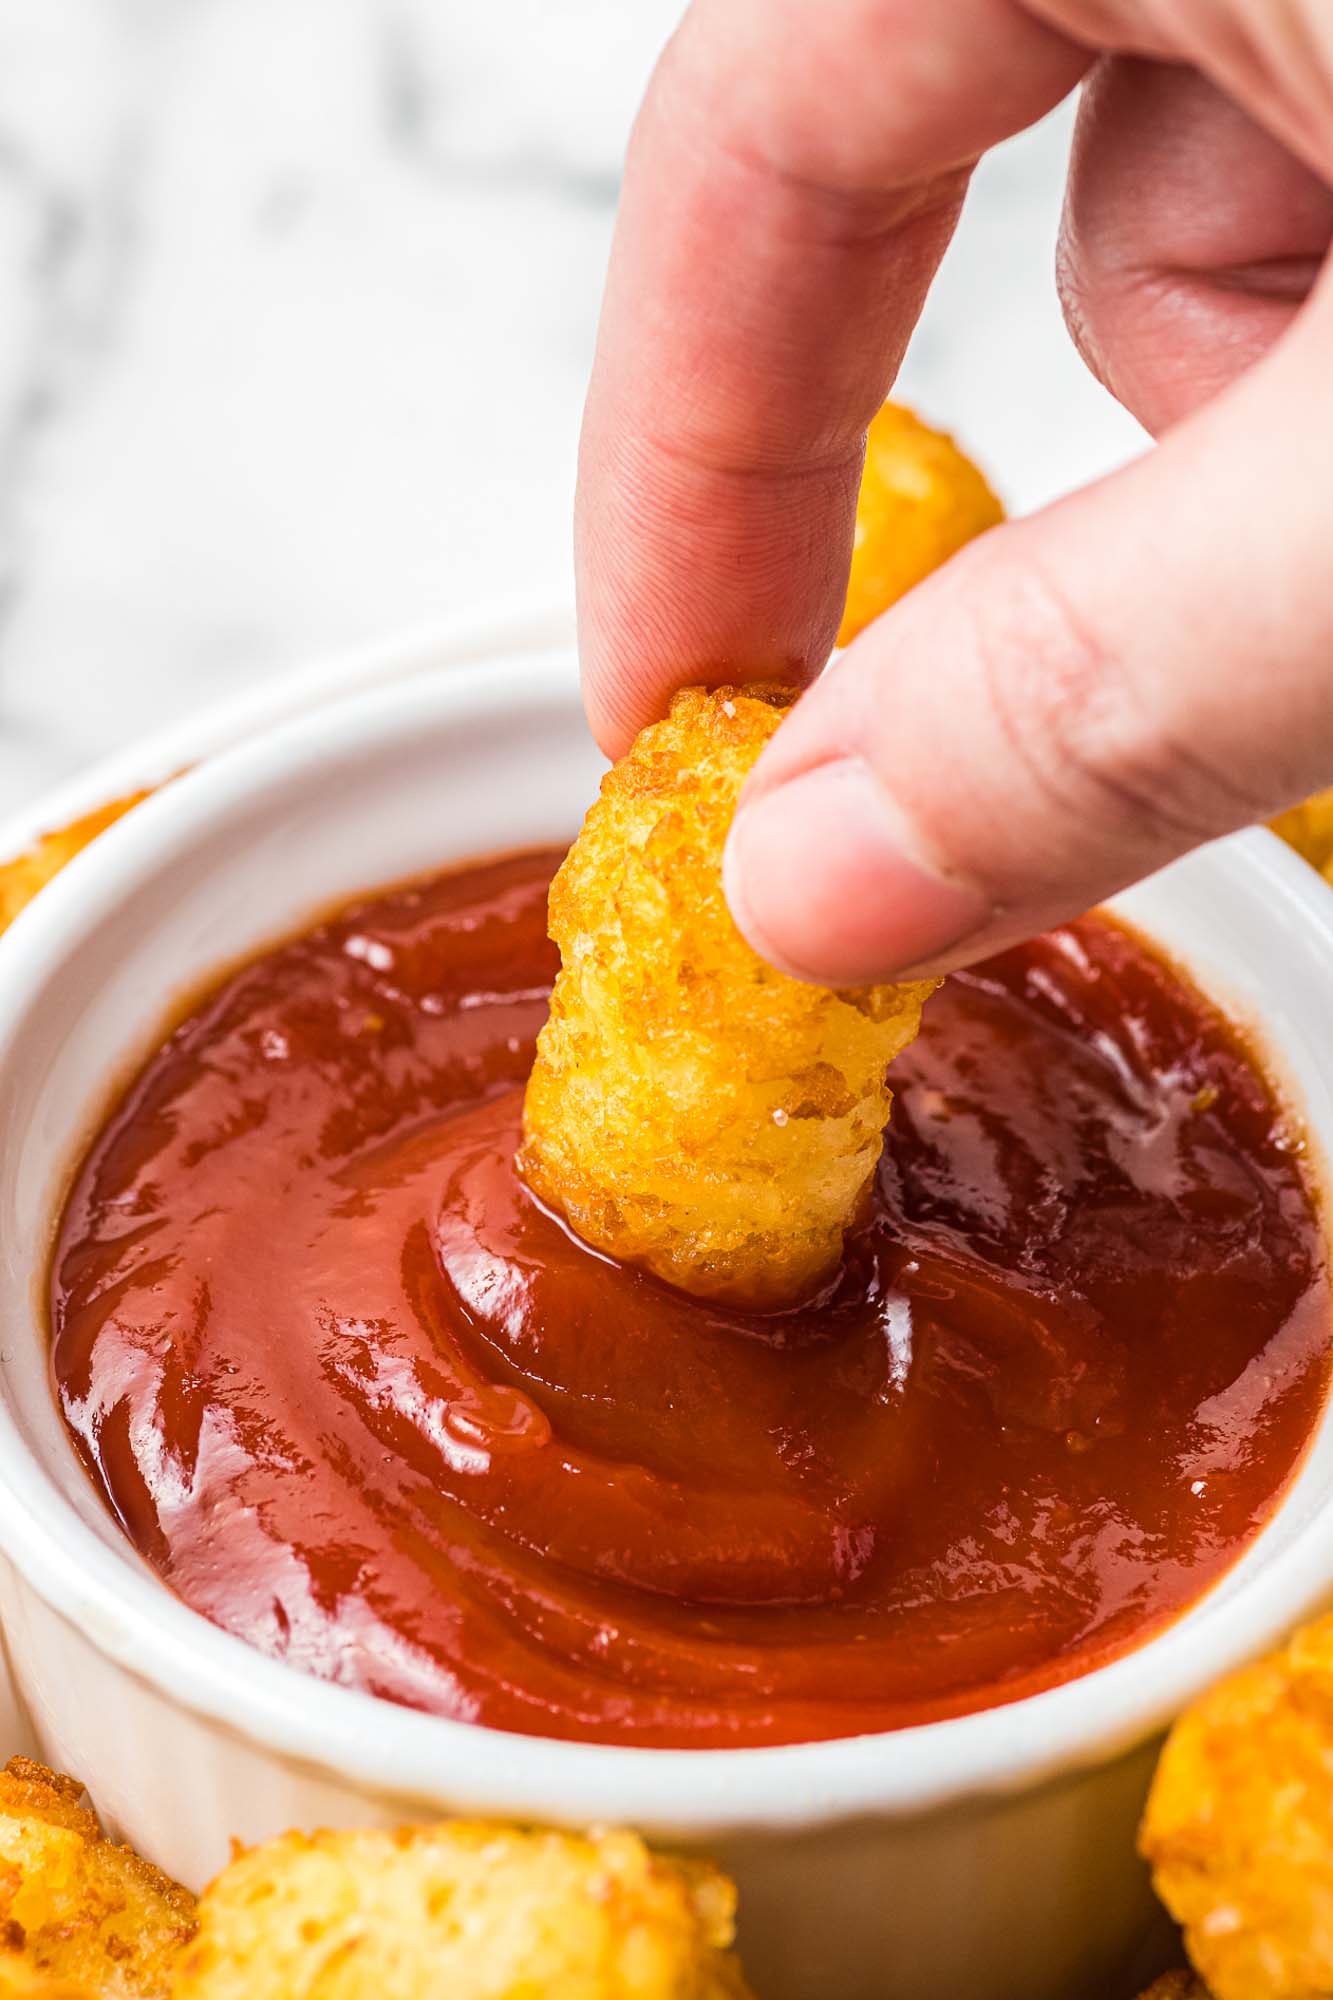 Dipping a tater tot in ketchup